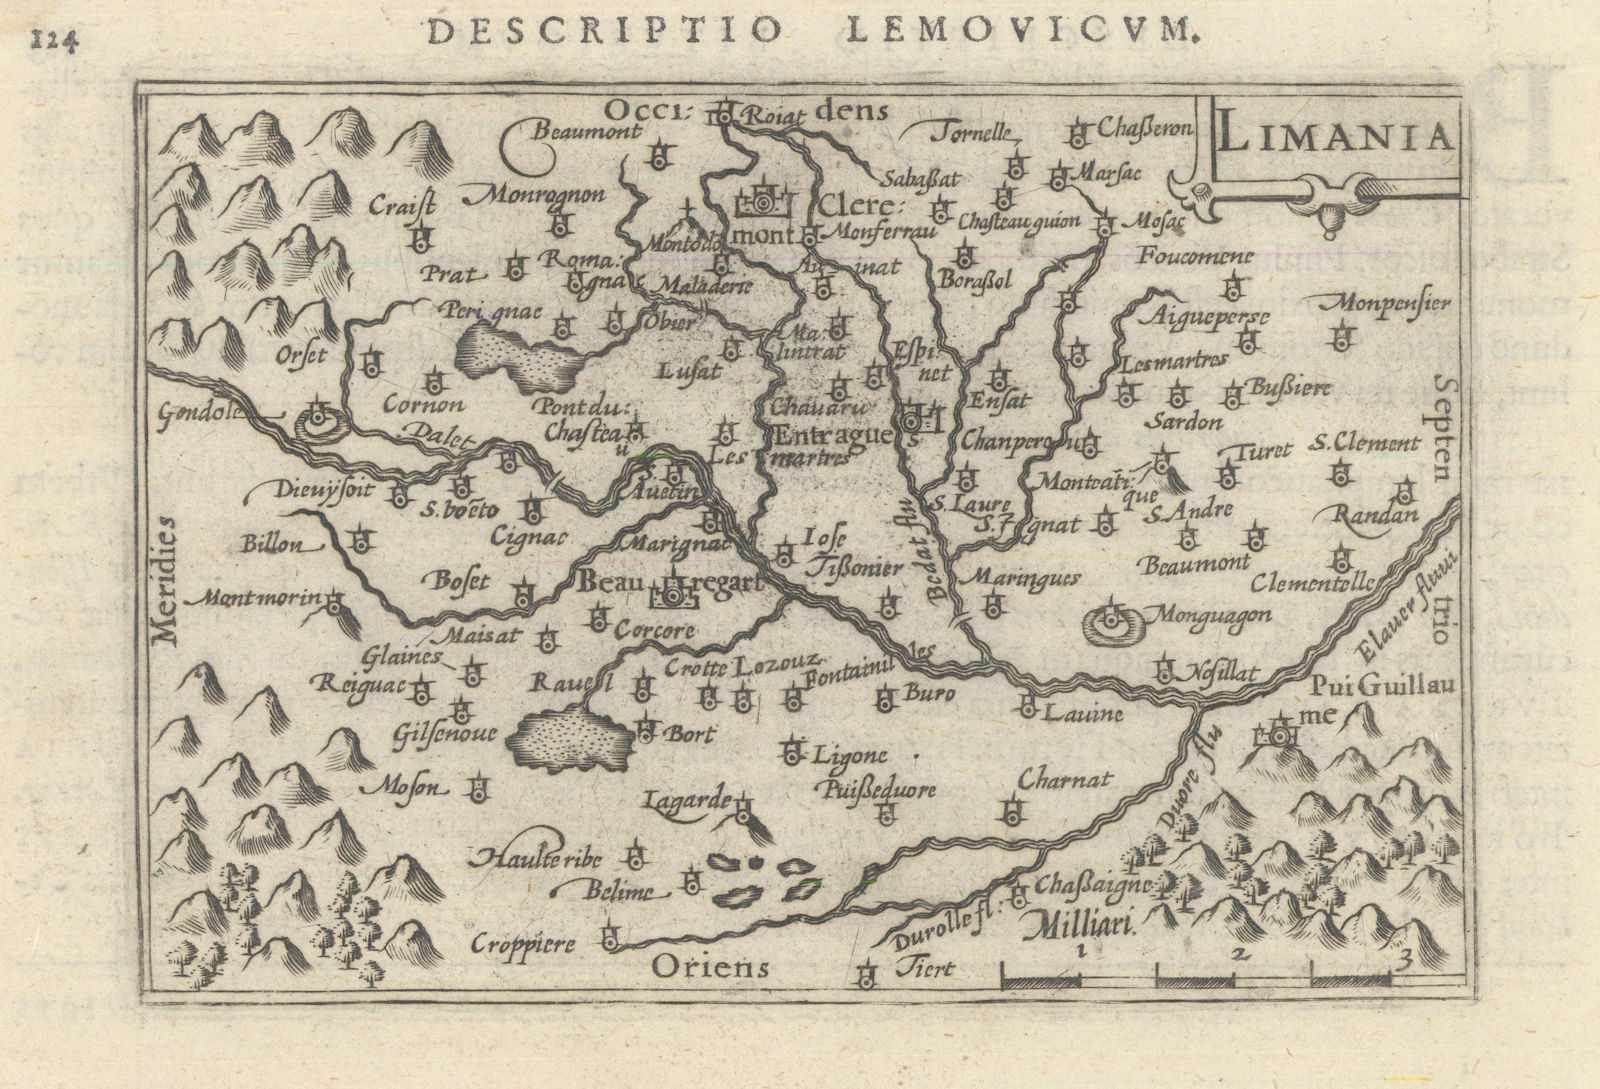 Lemovicum/Limania by Bertius/Langenes. Limagne. Allier valley, Auvergne 1603 map